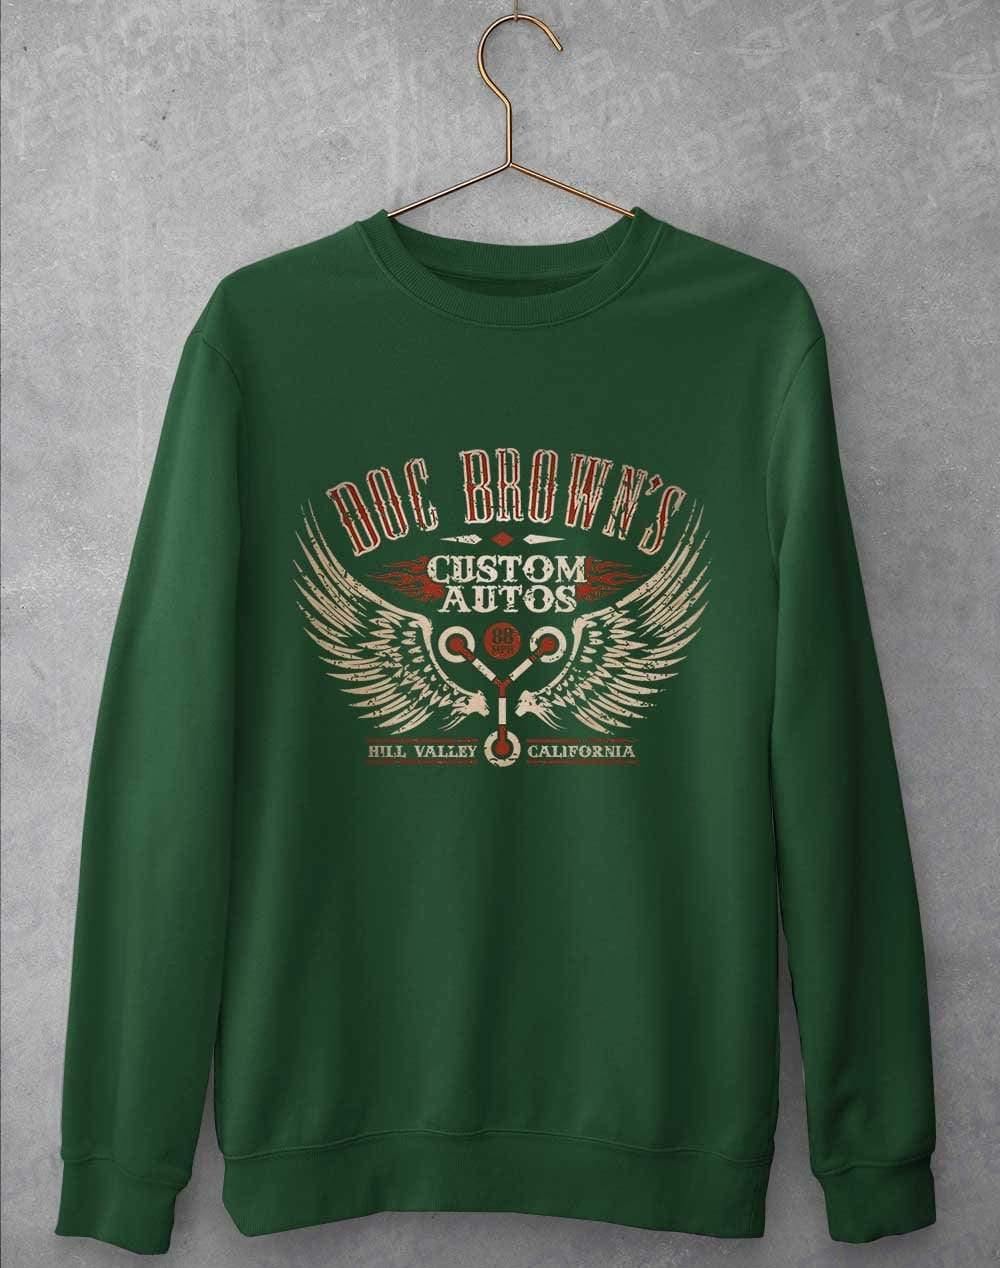 Doc Brown's Custom Autos Sweatshirt S / Bottle Green  - Off World Tees